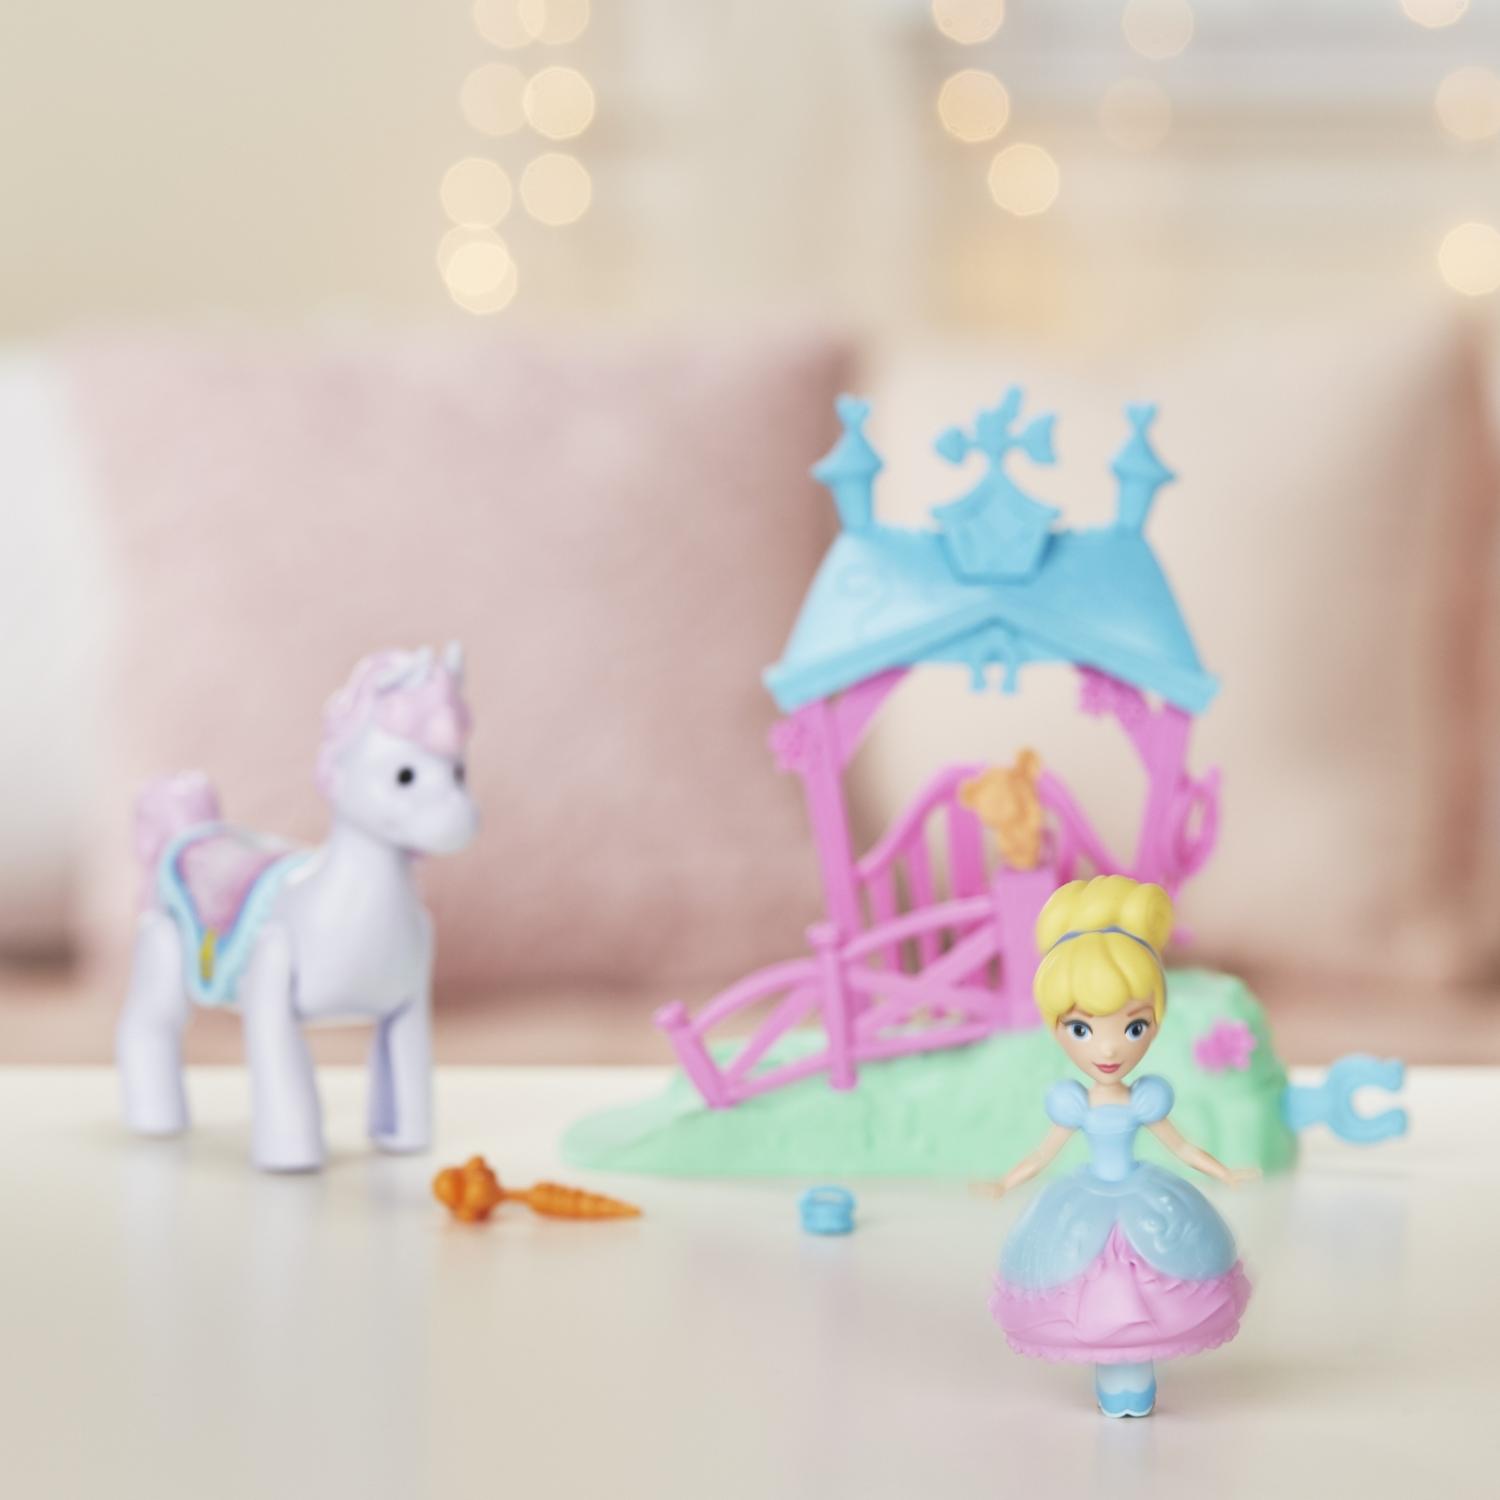 Игровой набор Disney Princess - Фигурка и транспорт, Жасмин, Золушка   